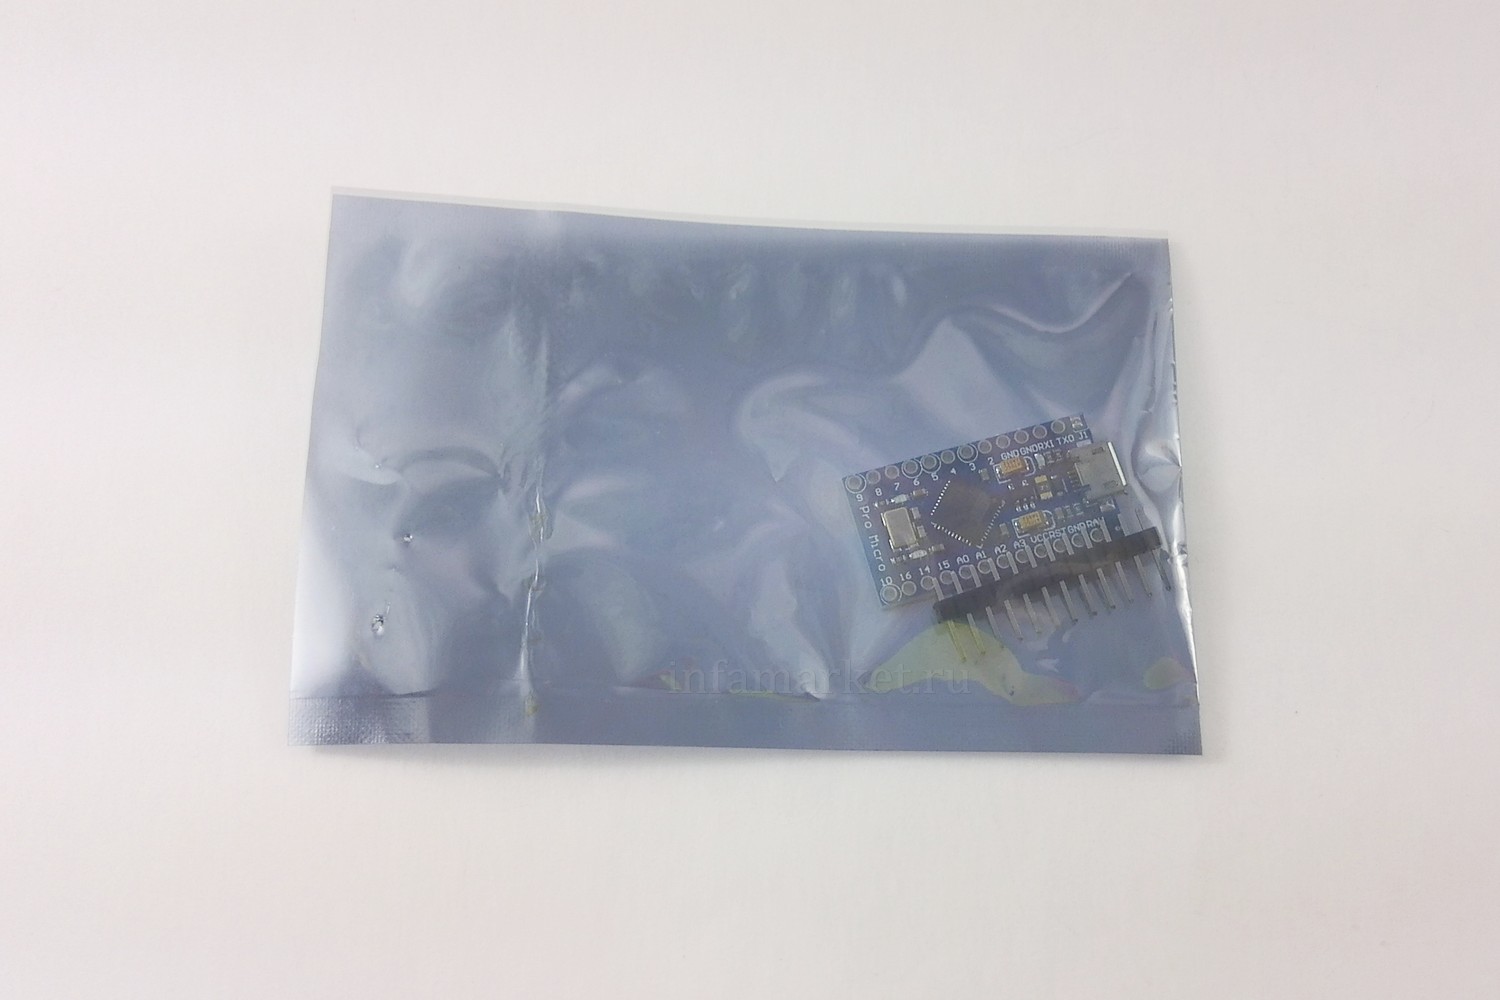 Arduino Pro Micro 5V 16MHz (упаковка)